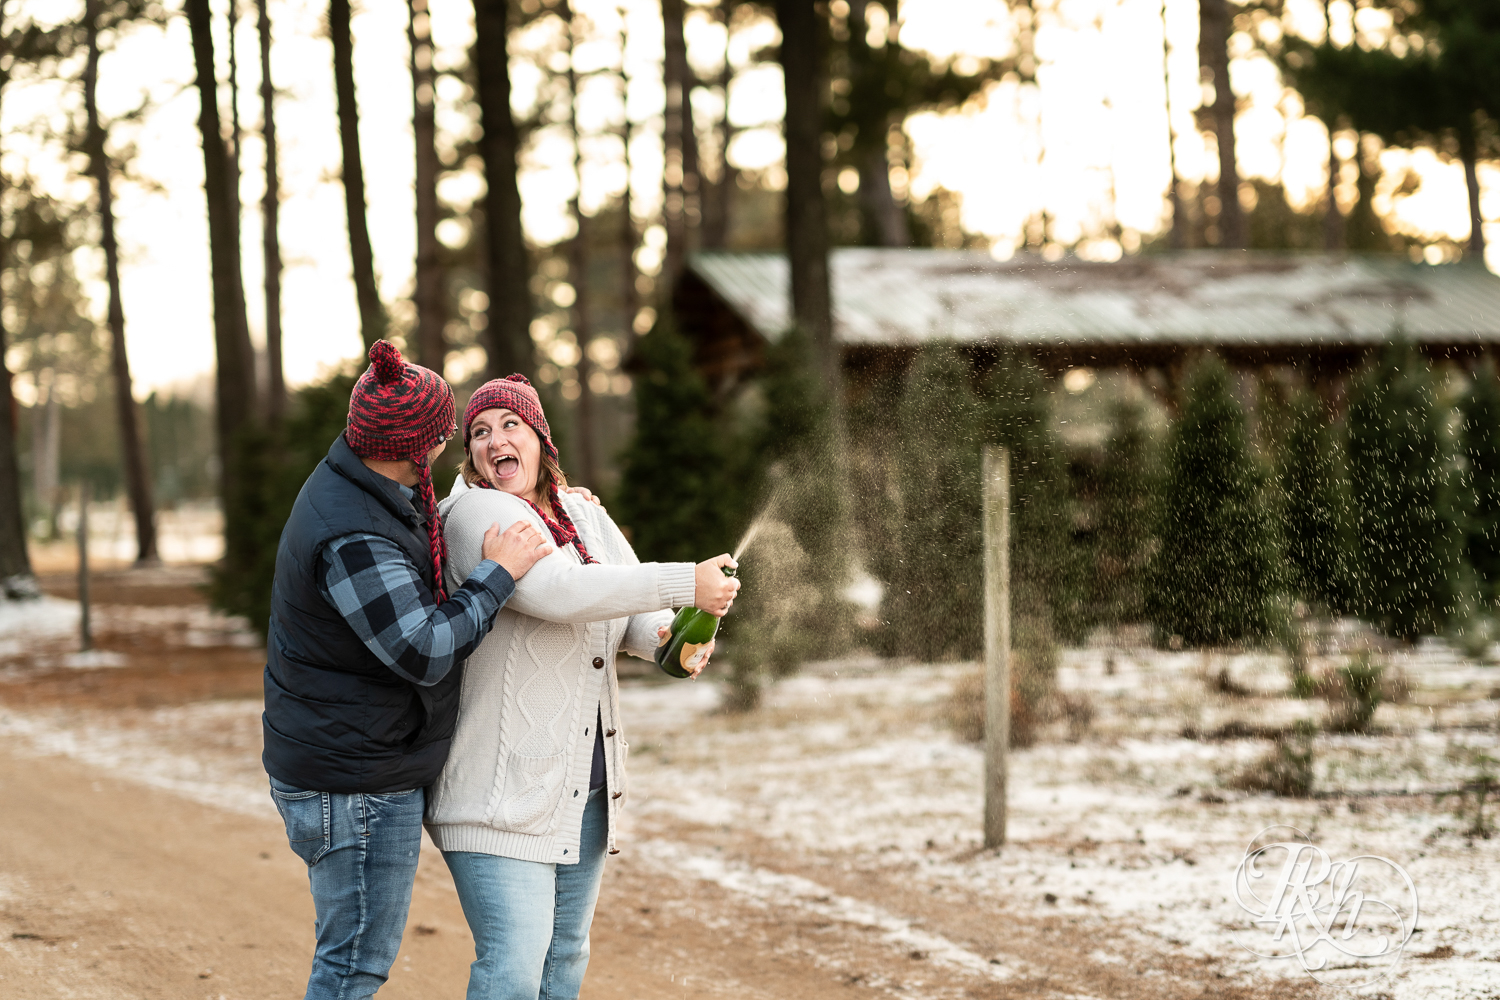 Black man and white woman spray champagne at Hansen Tree Farm in Anoka, Minnesota.